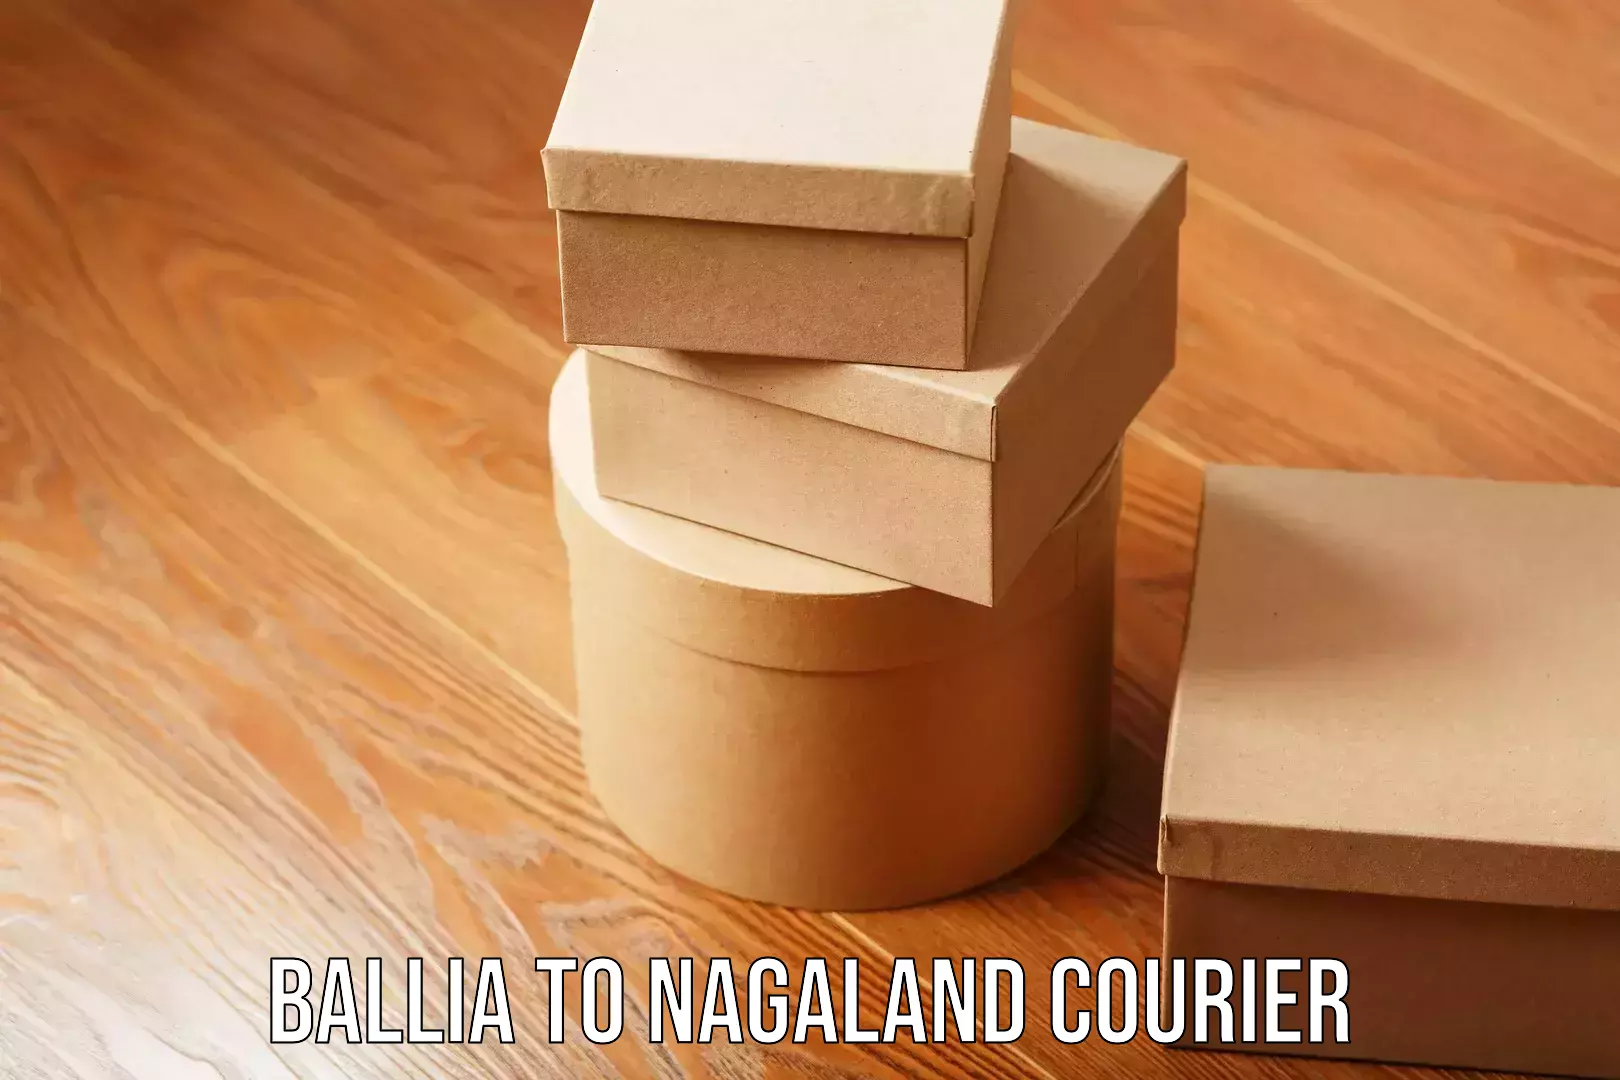 Courier app Ballia to Nagaland